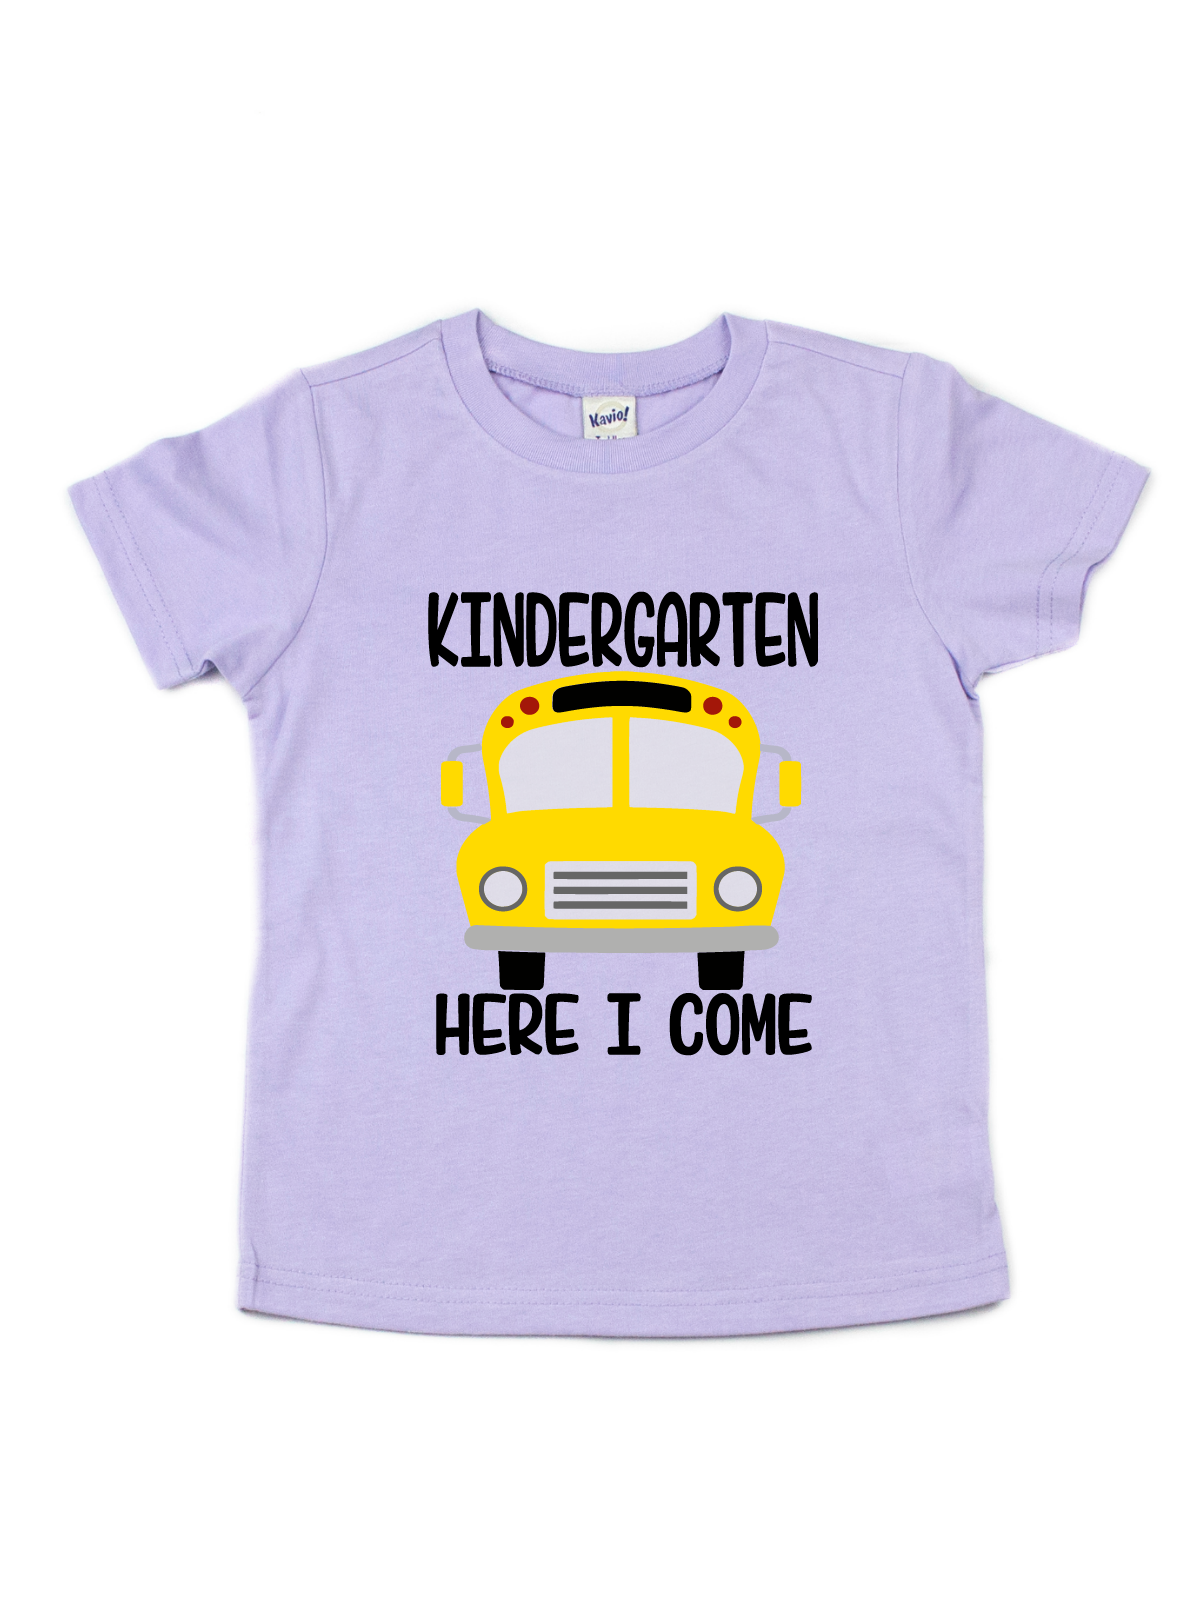 Kindergarten Here I Come Kids Back to School Shirt